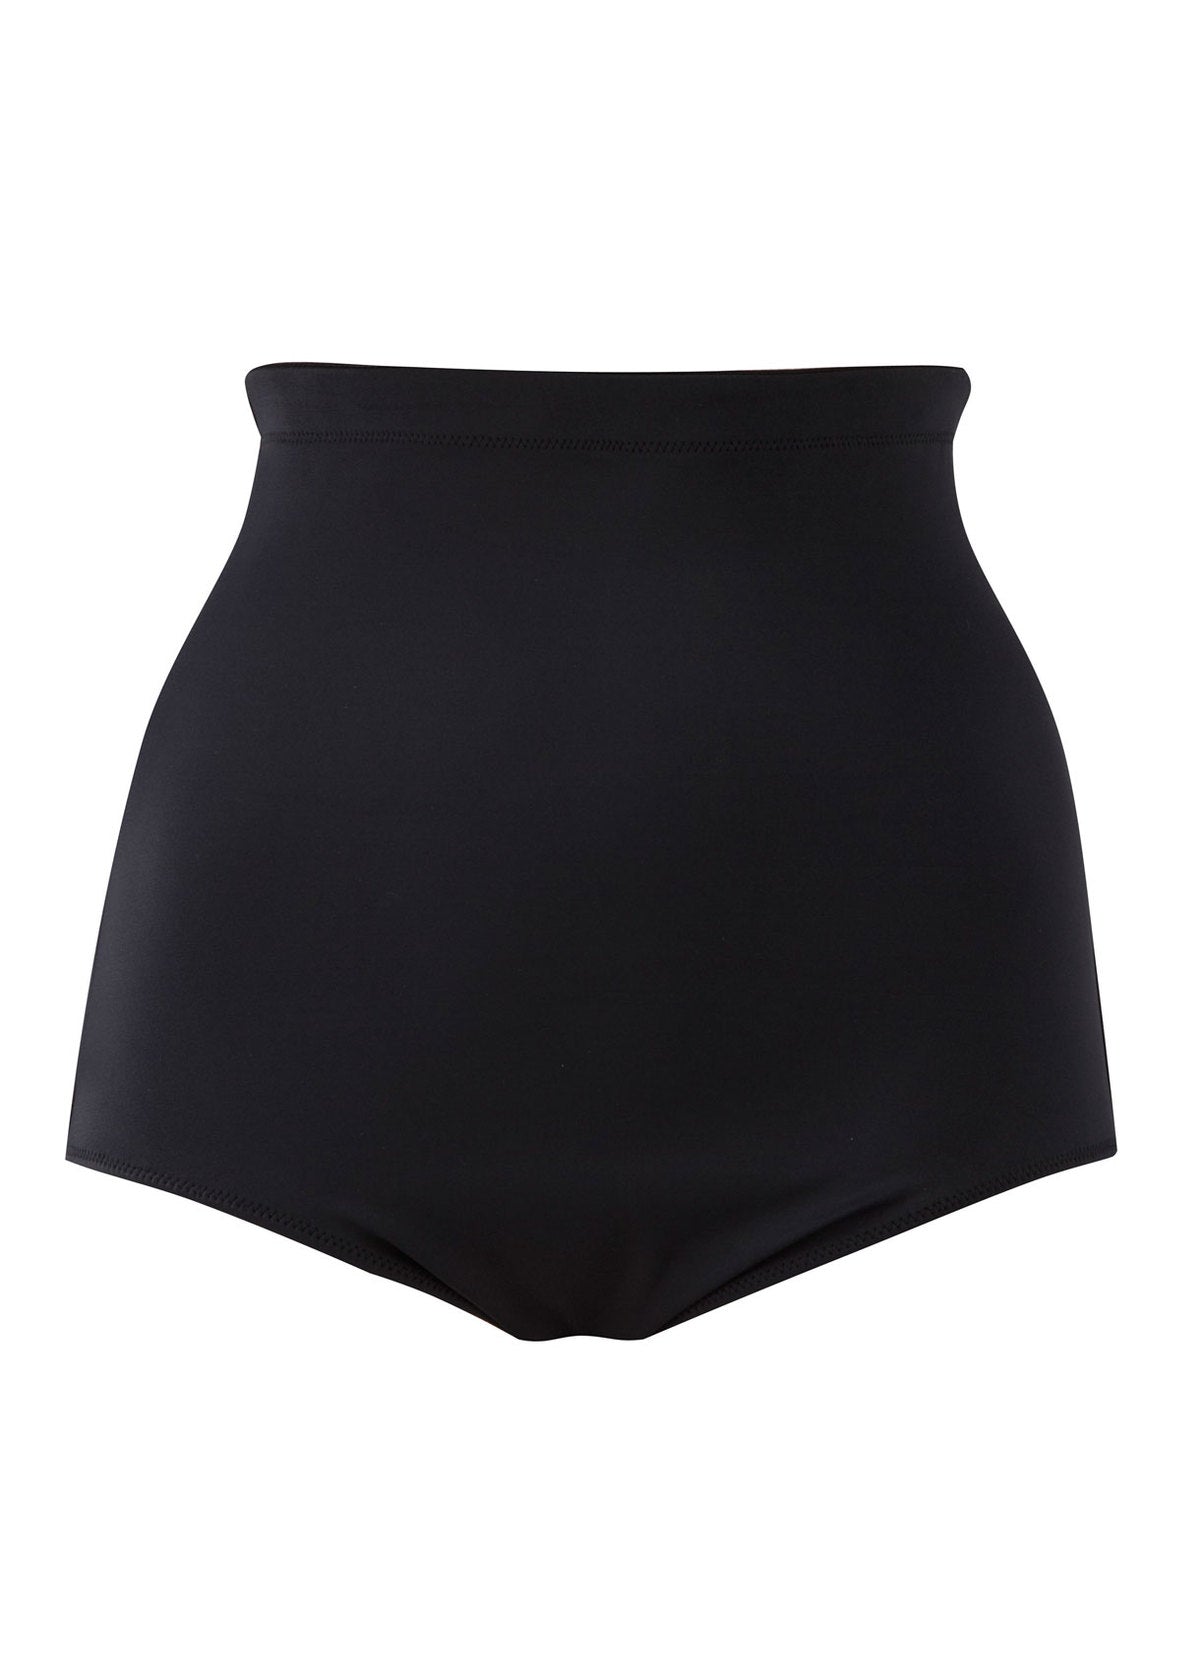 Essentials High Waist Bikini Brief - Black, front view product image